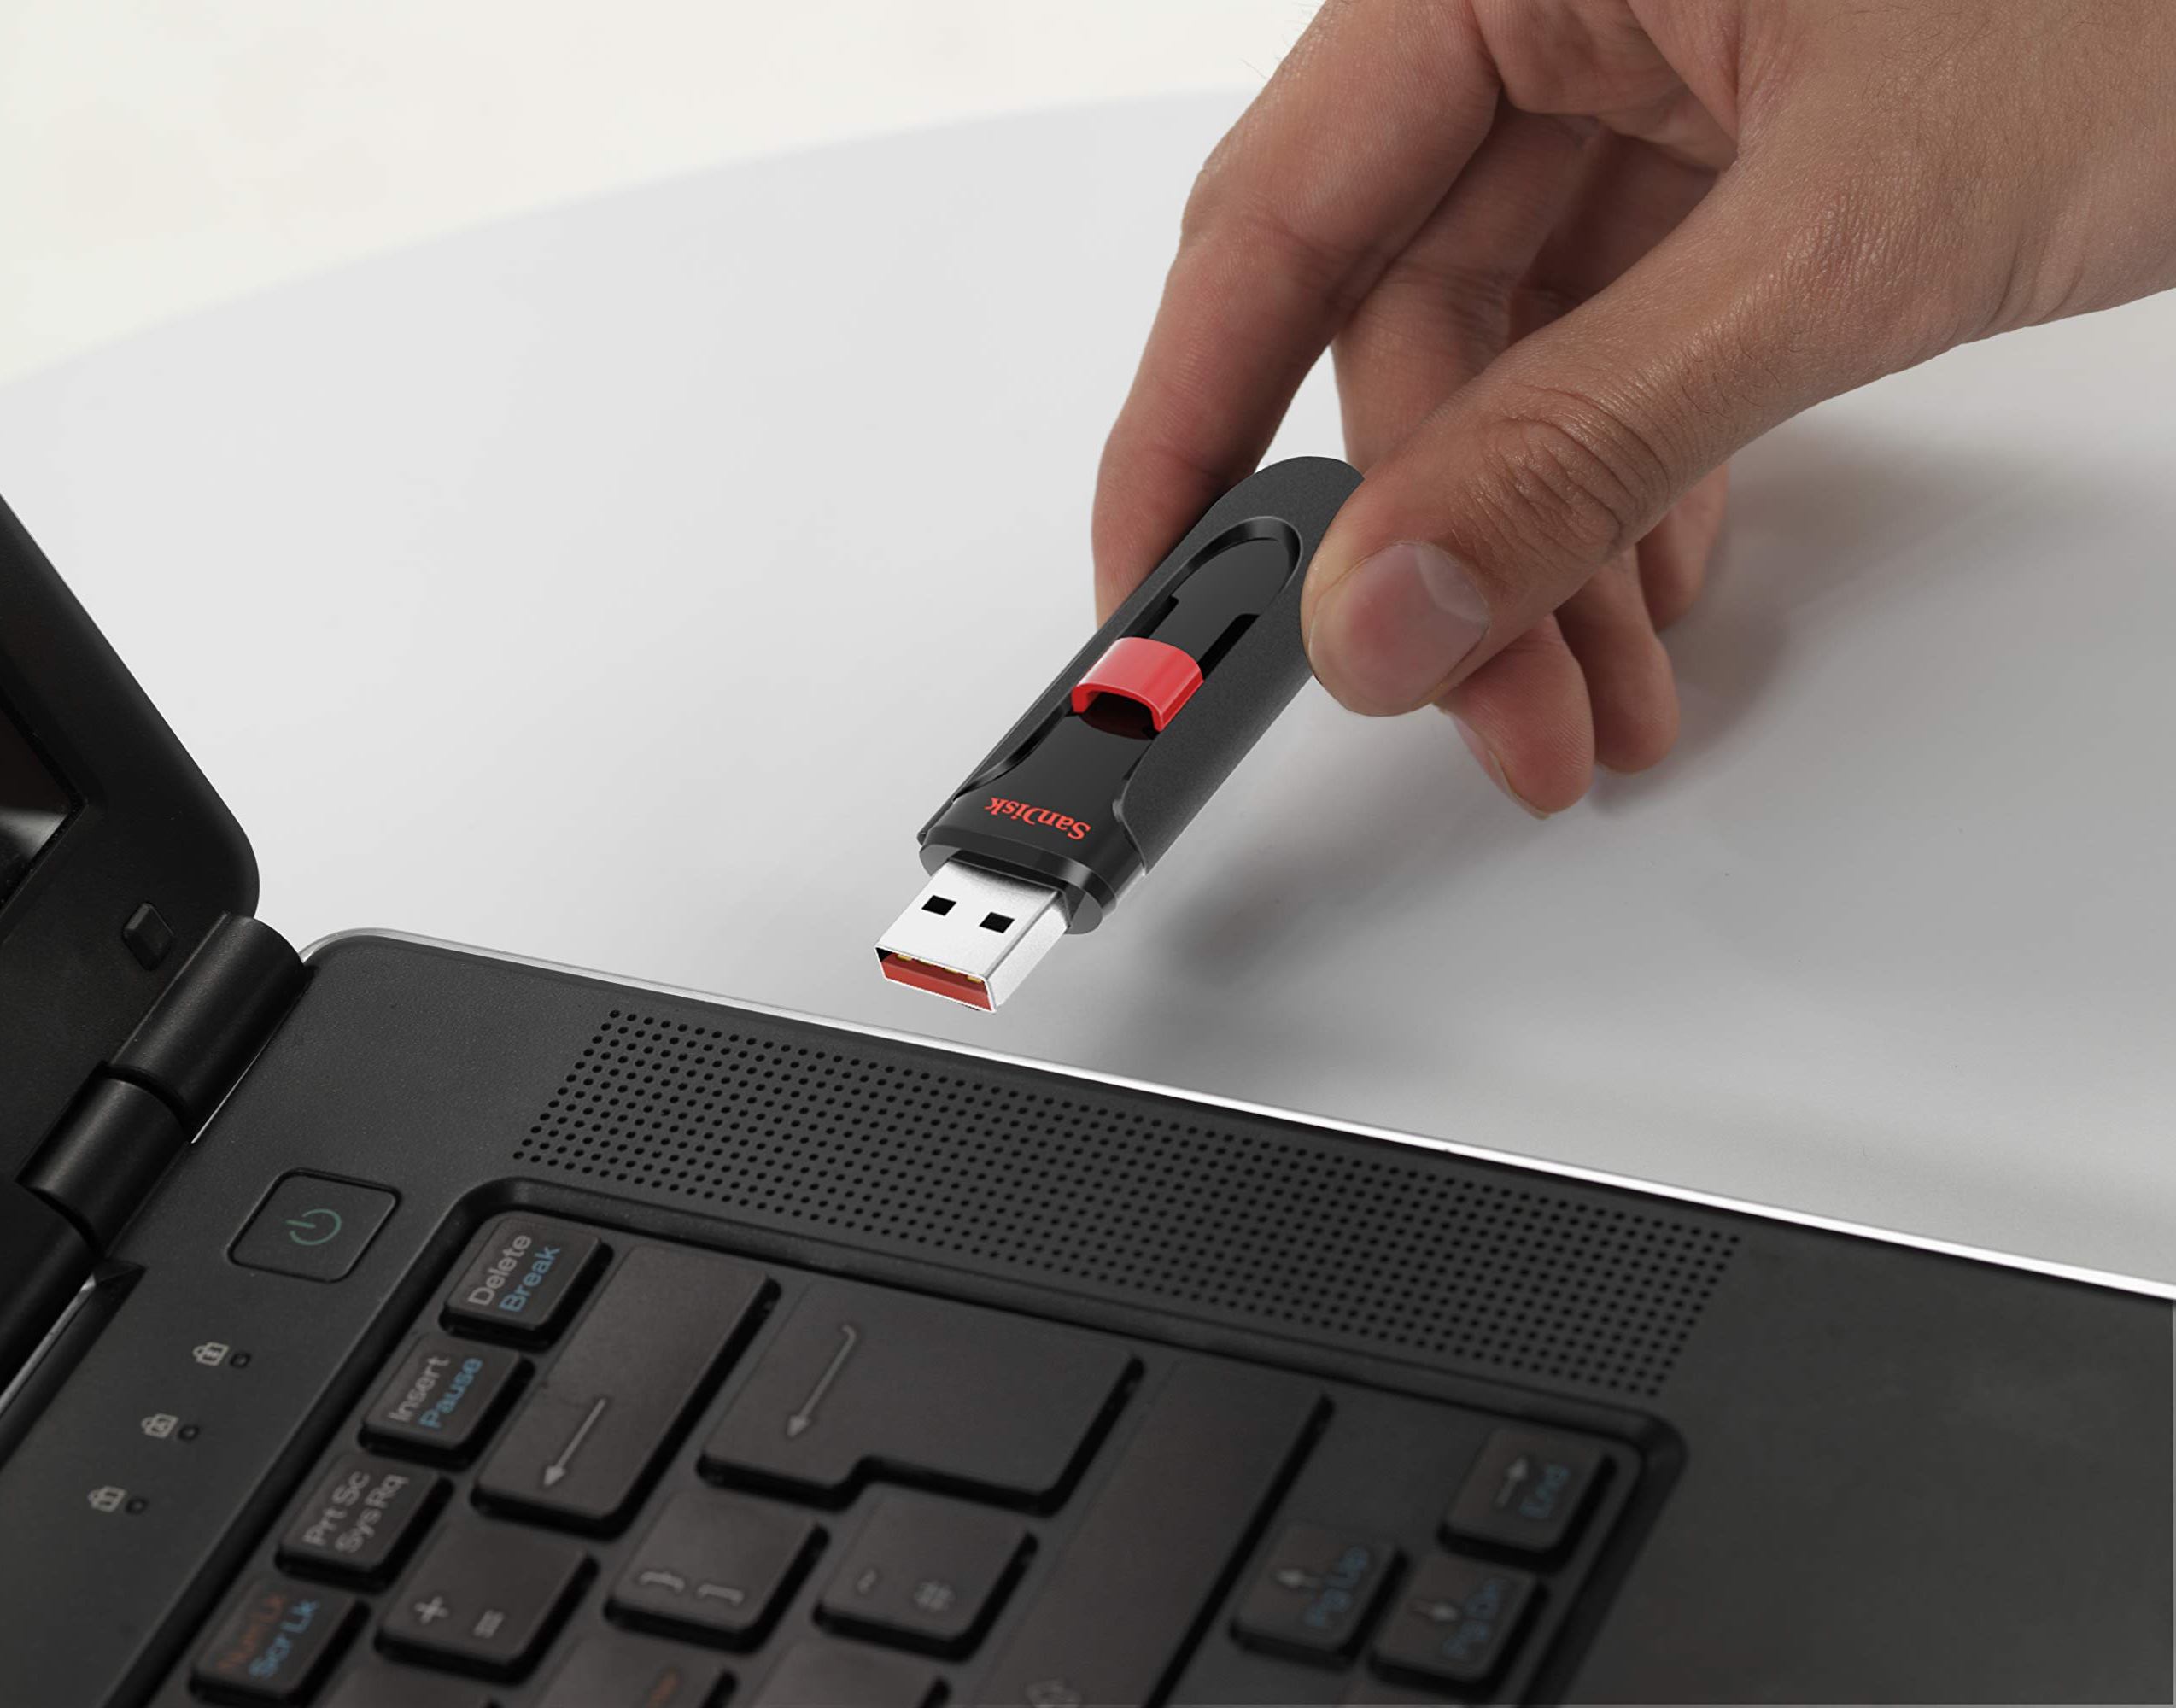 Stylov USB flashdisk SanDisk Cruzer Glide o kapacit 128 GB nabz snadn a bezpen zpsob sdlen, pesunu a zlohovn vaich nejdleitjch soubor.